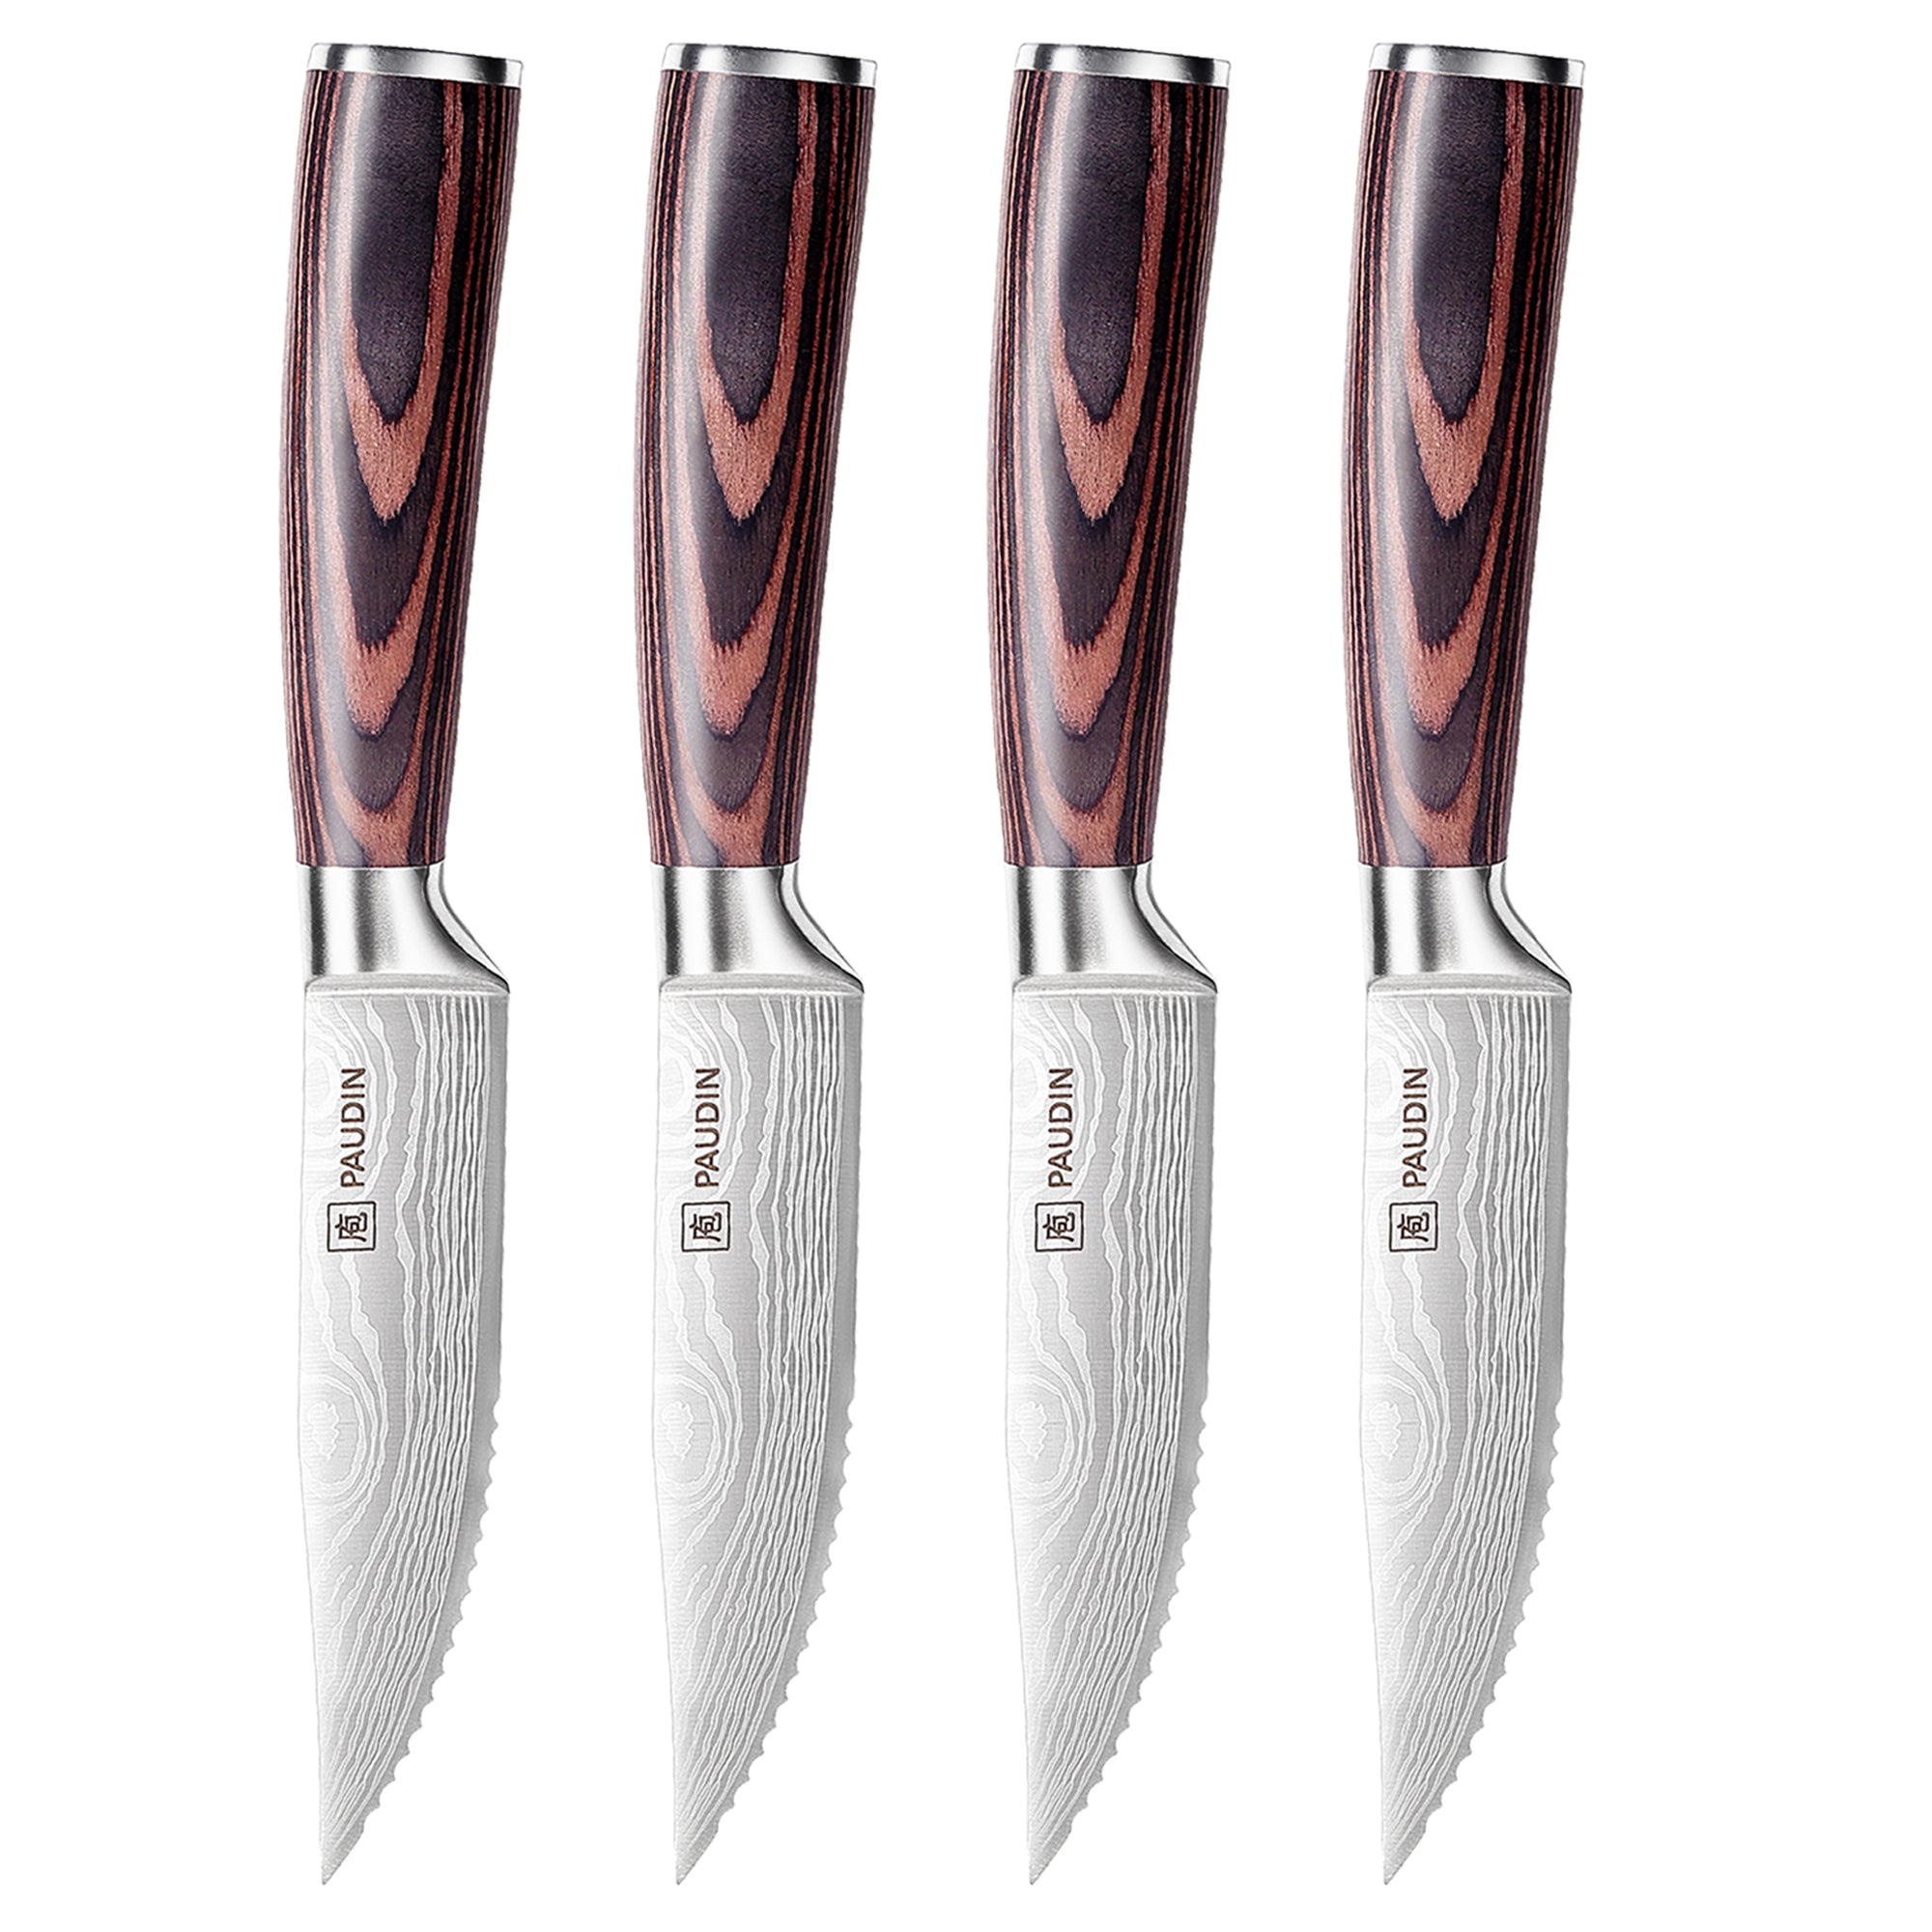 SHAN ZU Kitchen Steak Knives Set German Stainless Steel Steak Knives Set of  4, Super Sharp Steak Knives with Serrated Edge & Ergonomic Pakkawood